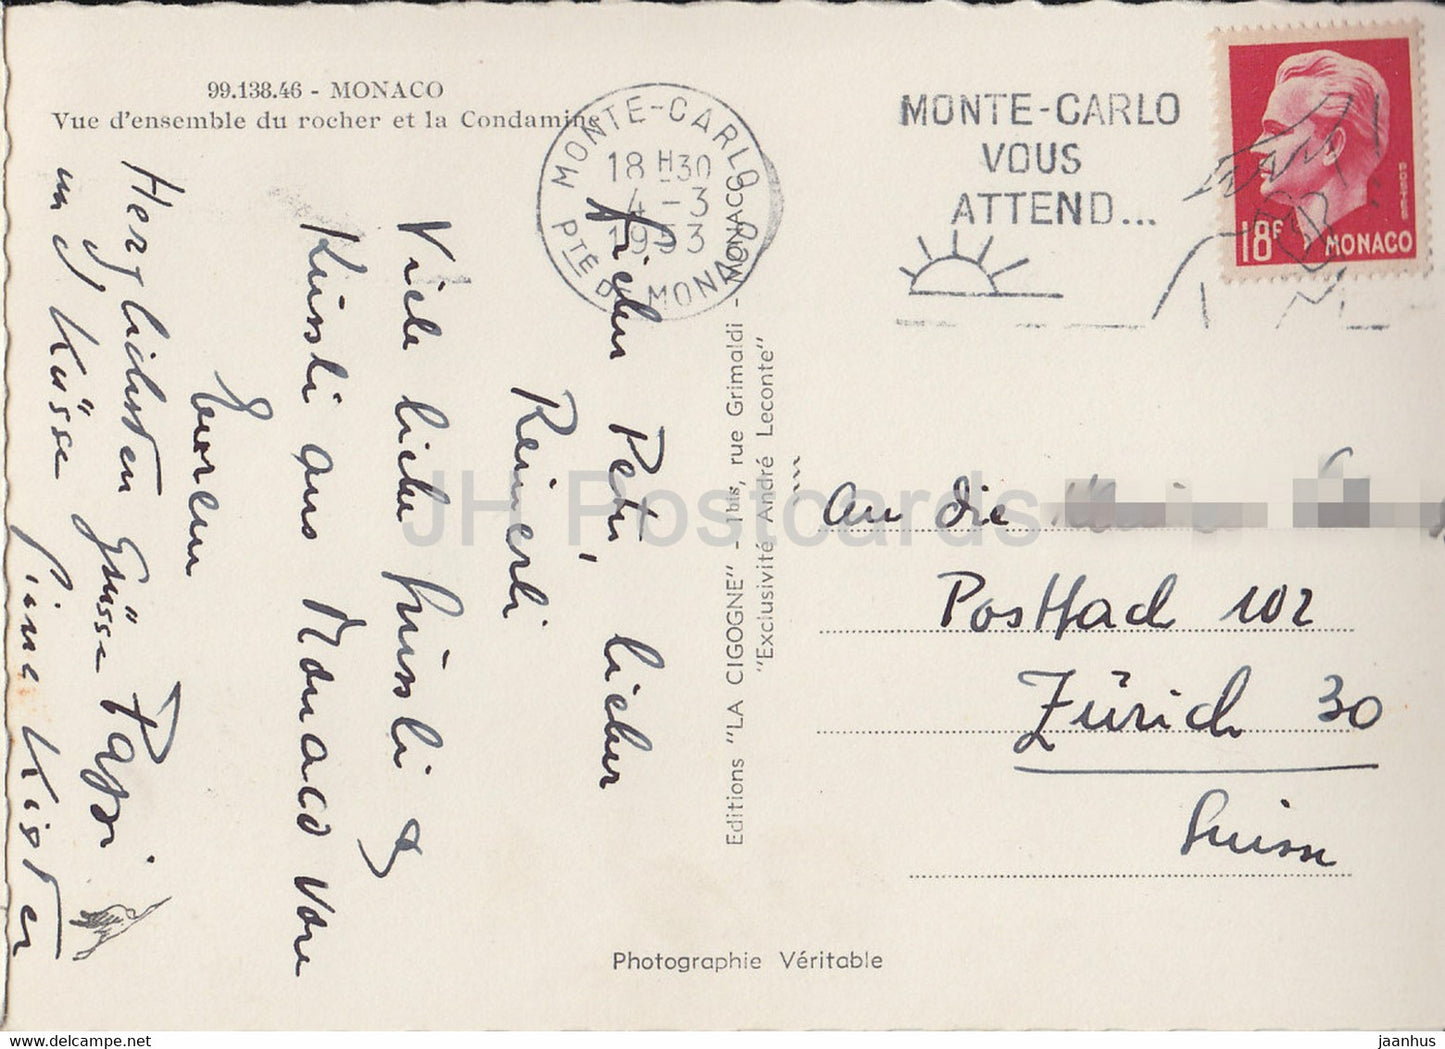 Vue d'ensemble du rocher et la Condamine - alte Postkarte - 1953 - Monaco - gebraucht